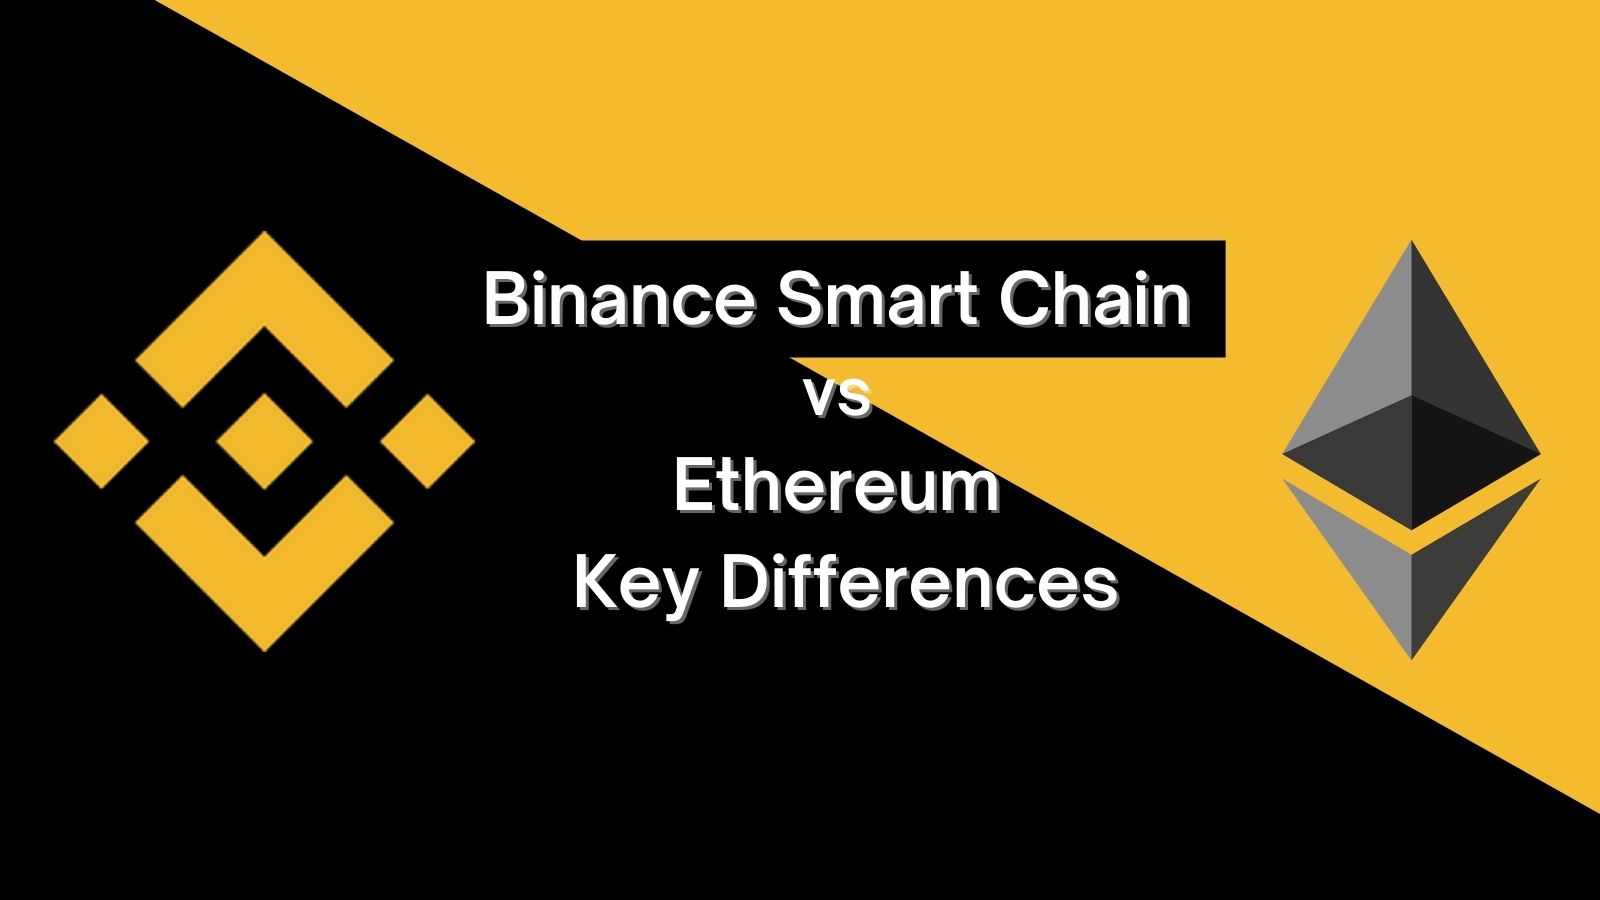 Binance Smart Chain vs Ethereum? - Key Differences